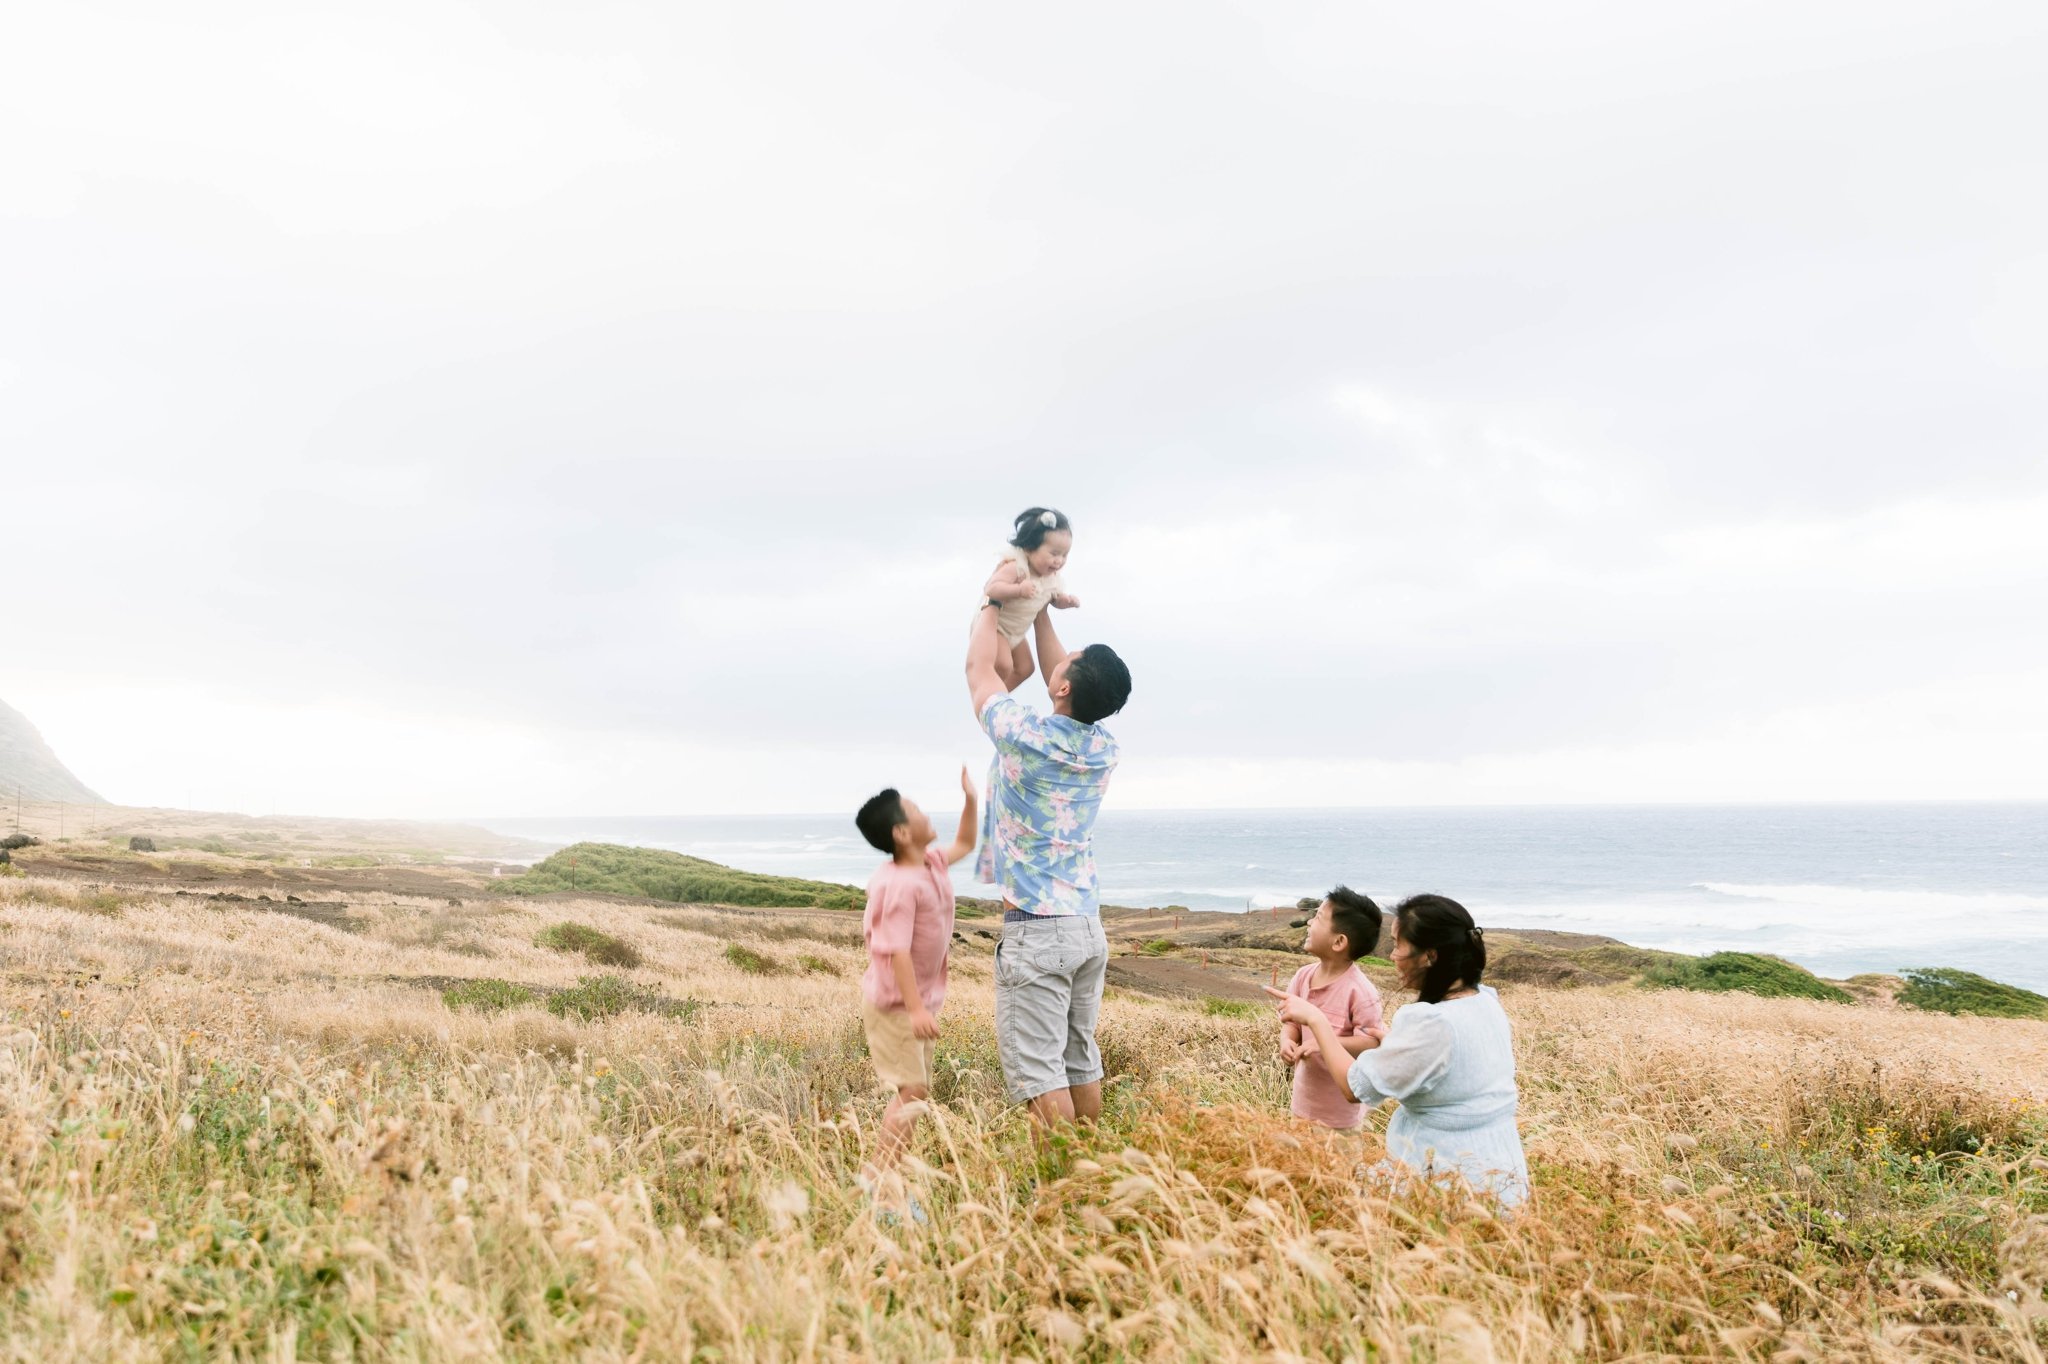  Lifestyle Family Photographer in Oahu, Hawaii - Kaena Point